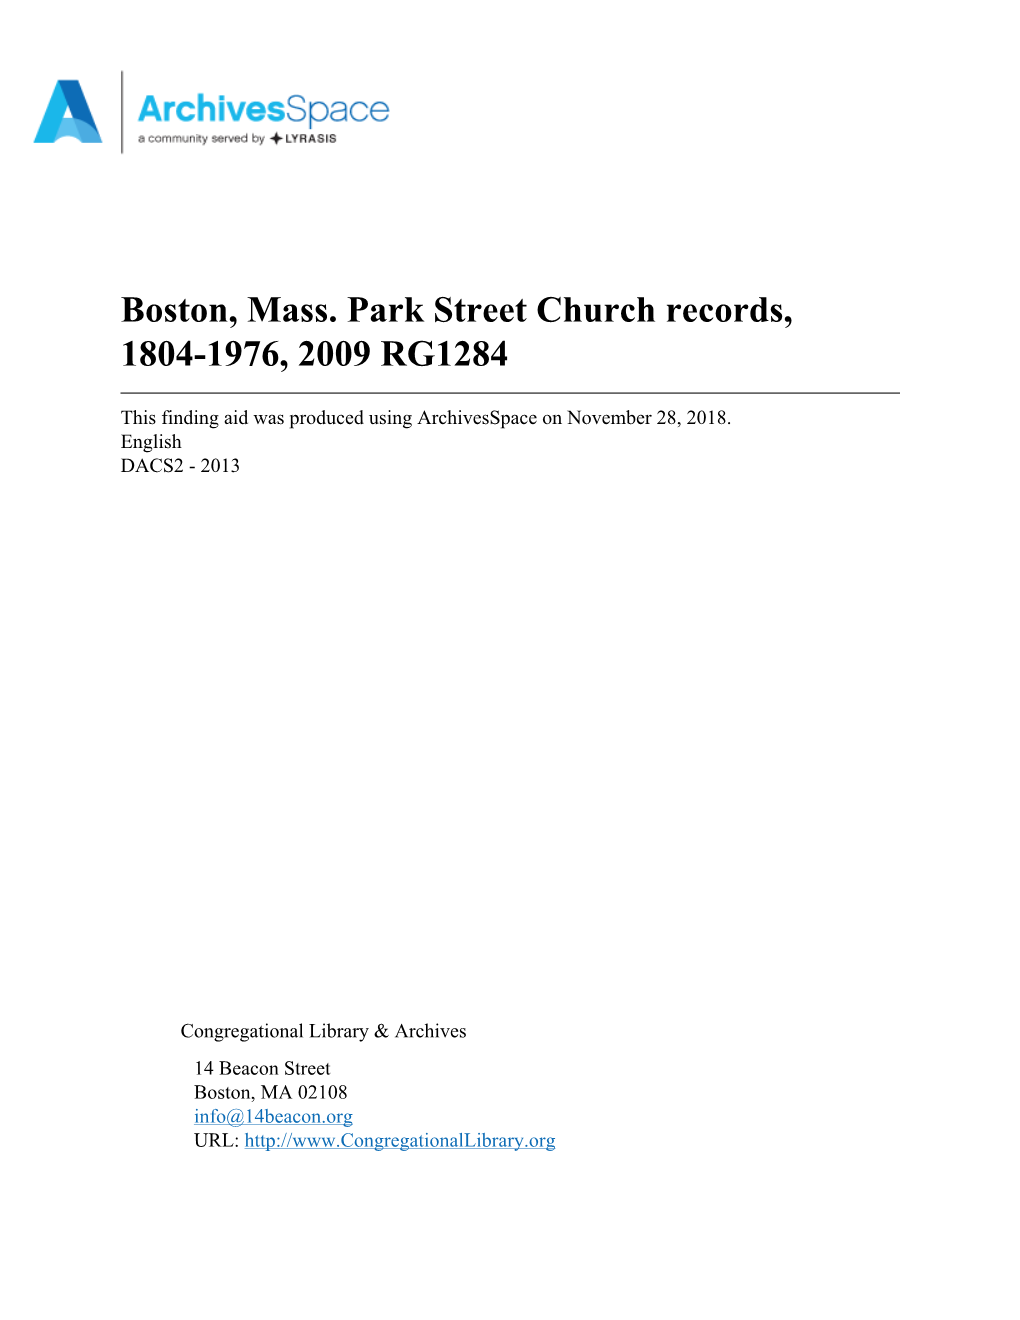 Boston, Mass. Park Street Church Records, 1804-1976, 2009 RG1284